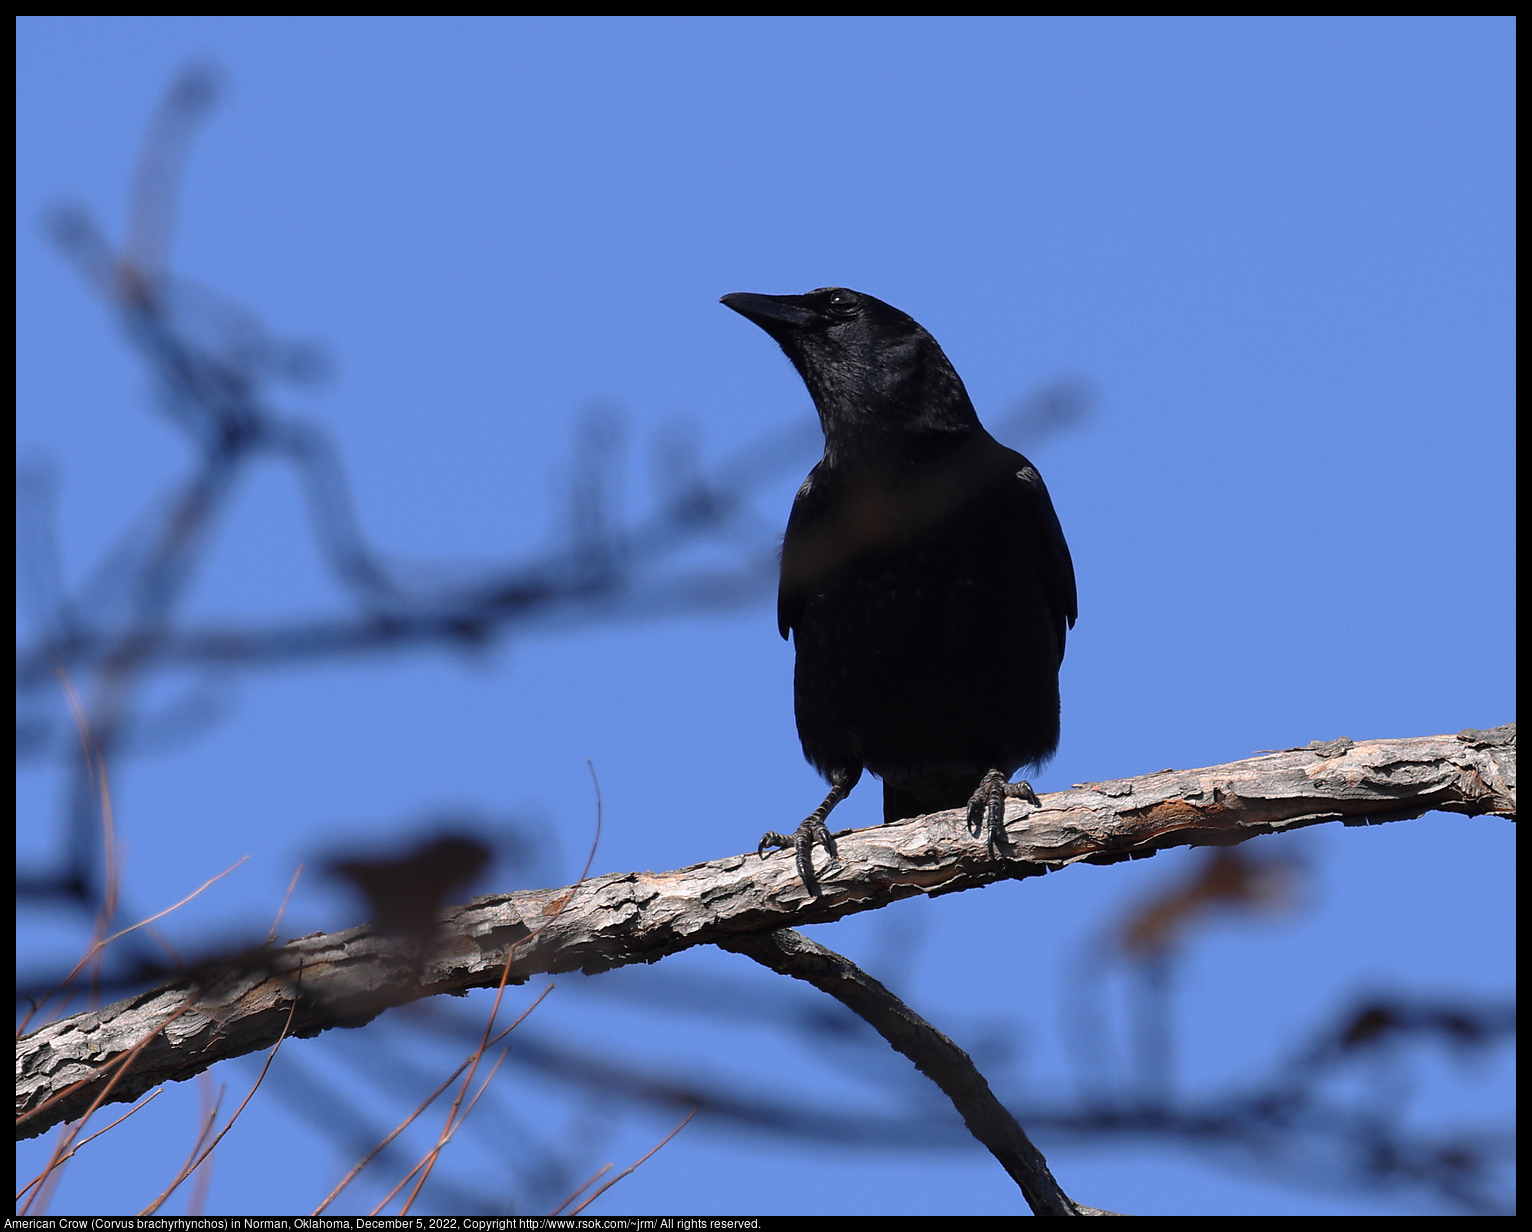 American Crow (Corvus brachyrhynchos) in Norman, Oklahoma, December 5, 2022